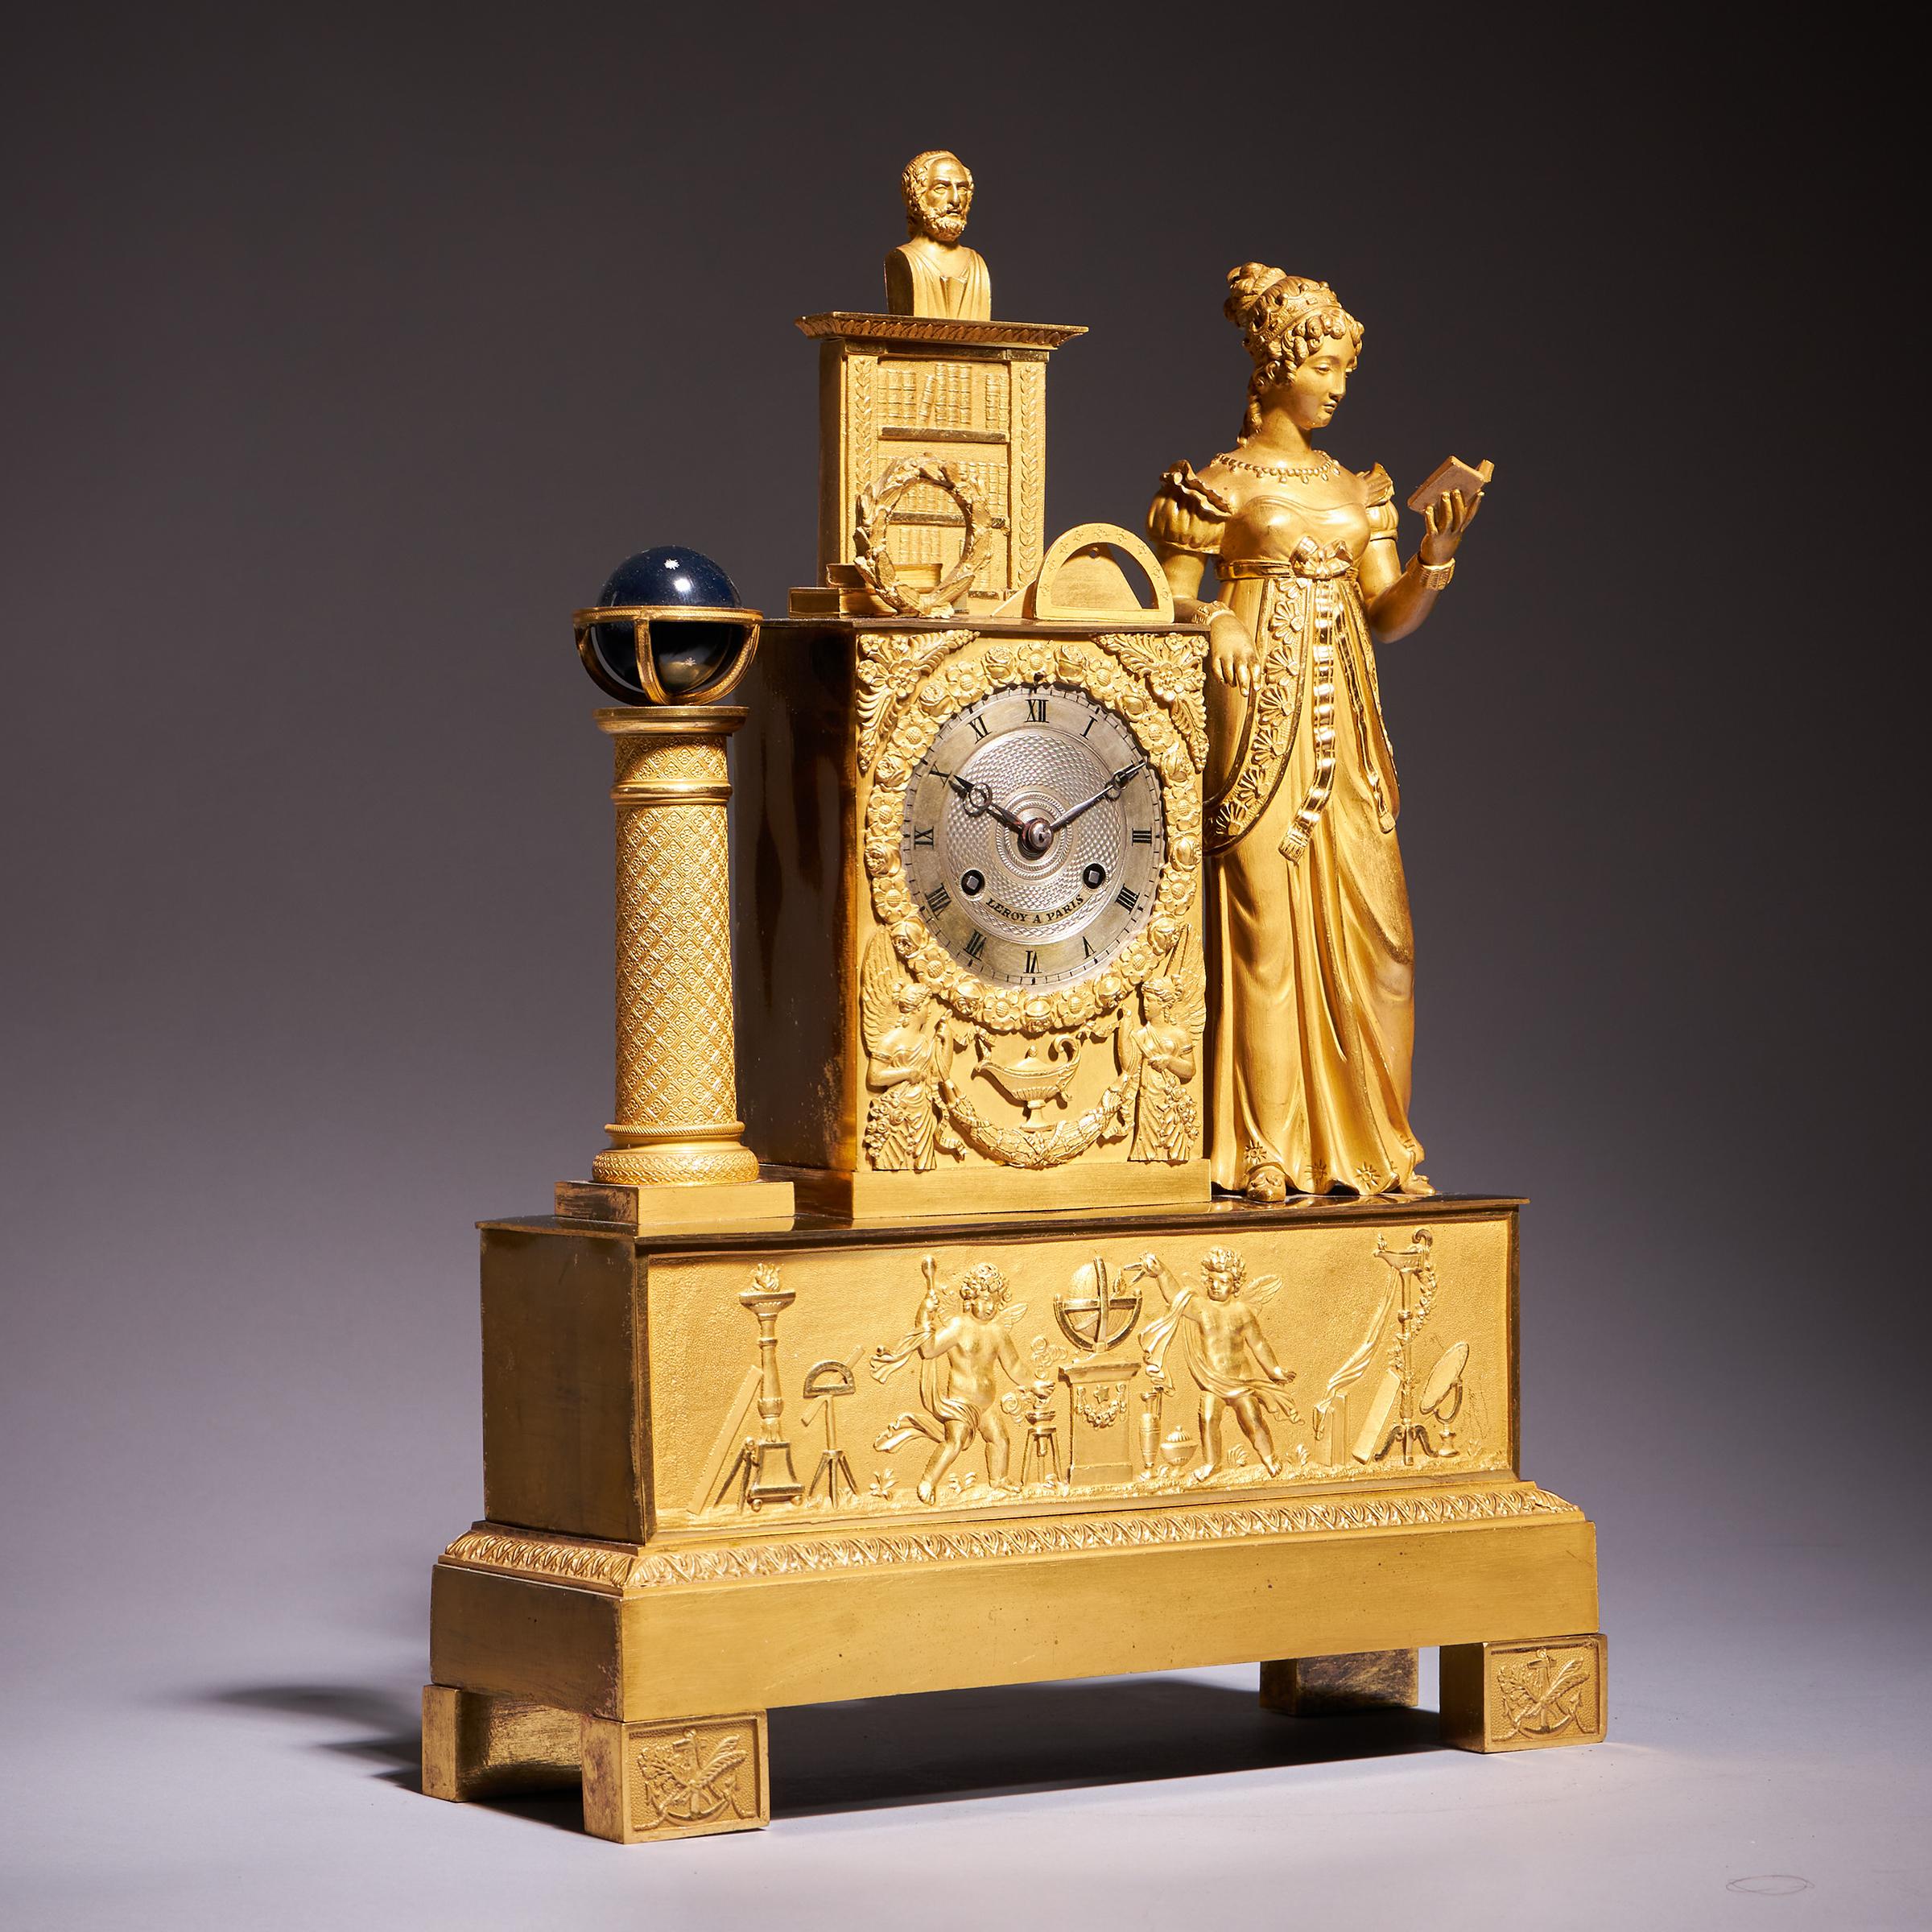 Fine 19th century French ormolu mantel clock (pendule) by Leroy a Paris, c. 1825 For Sale 1